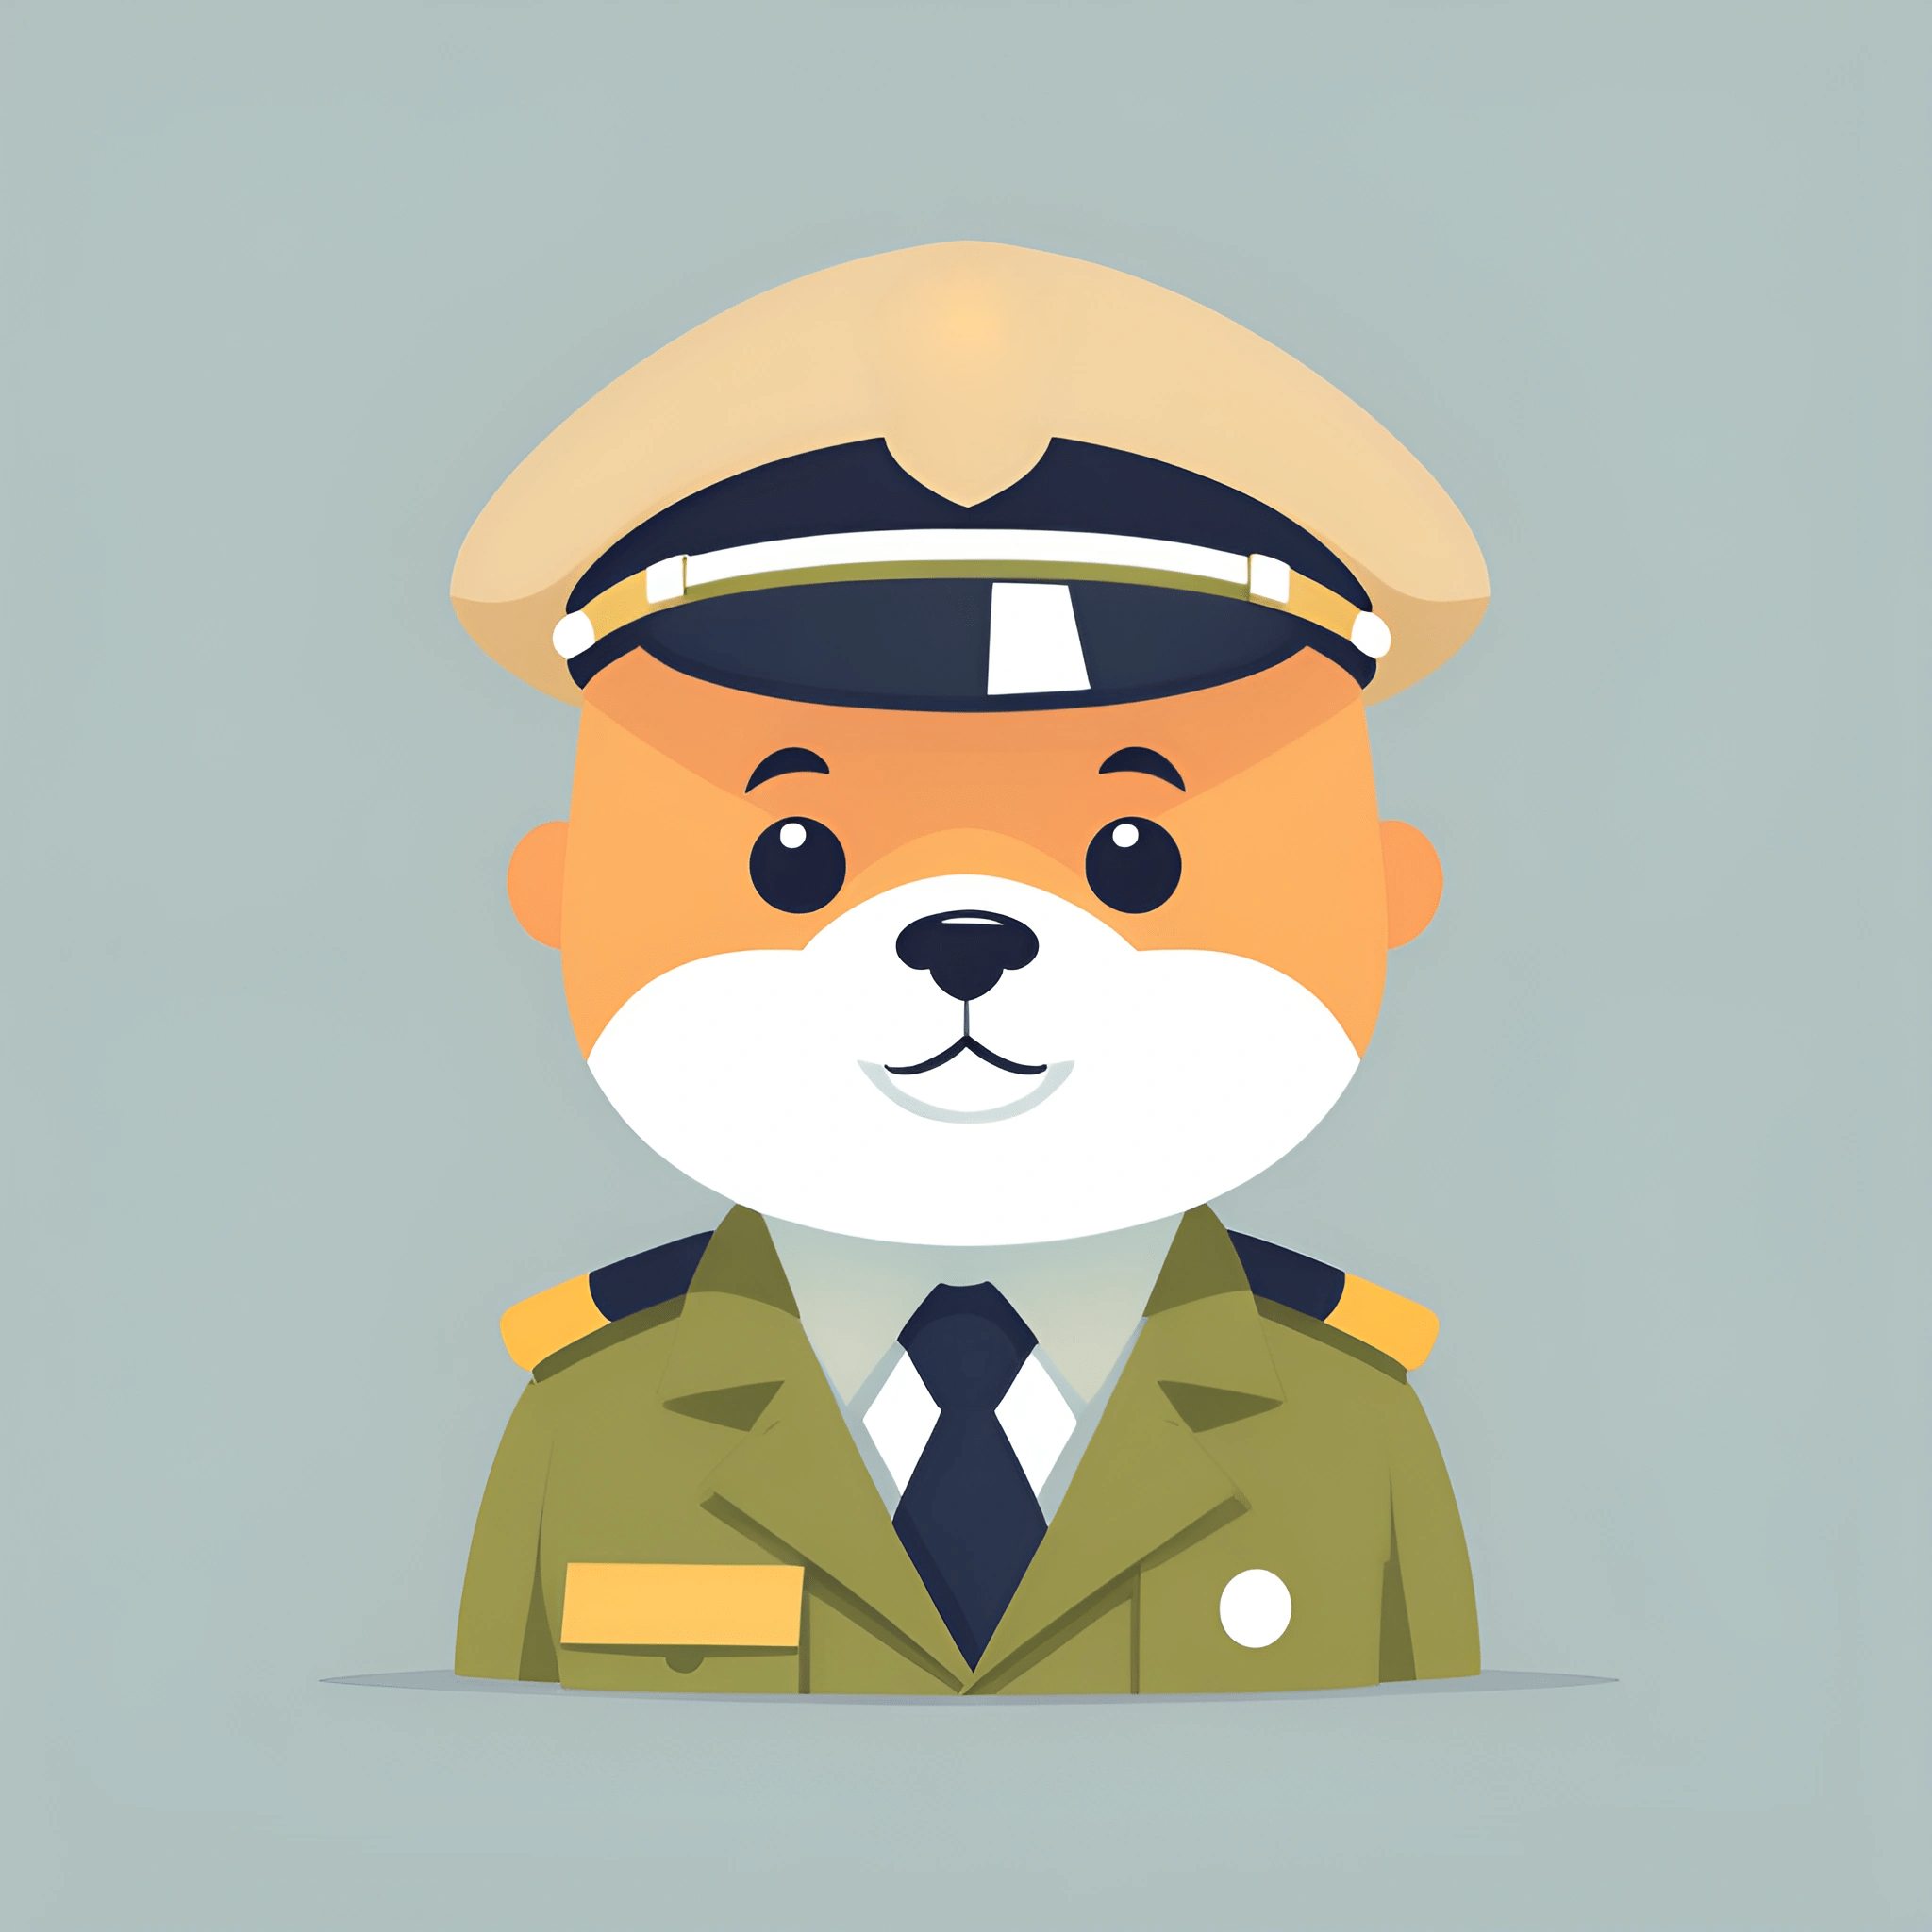 a cartoon of a dog wearing a military uniform